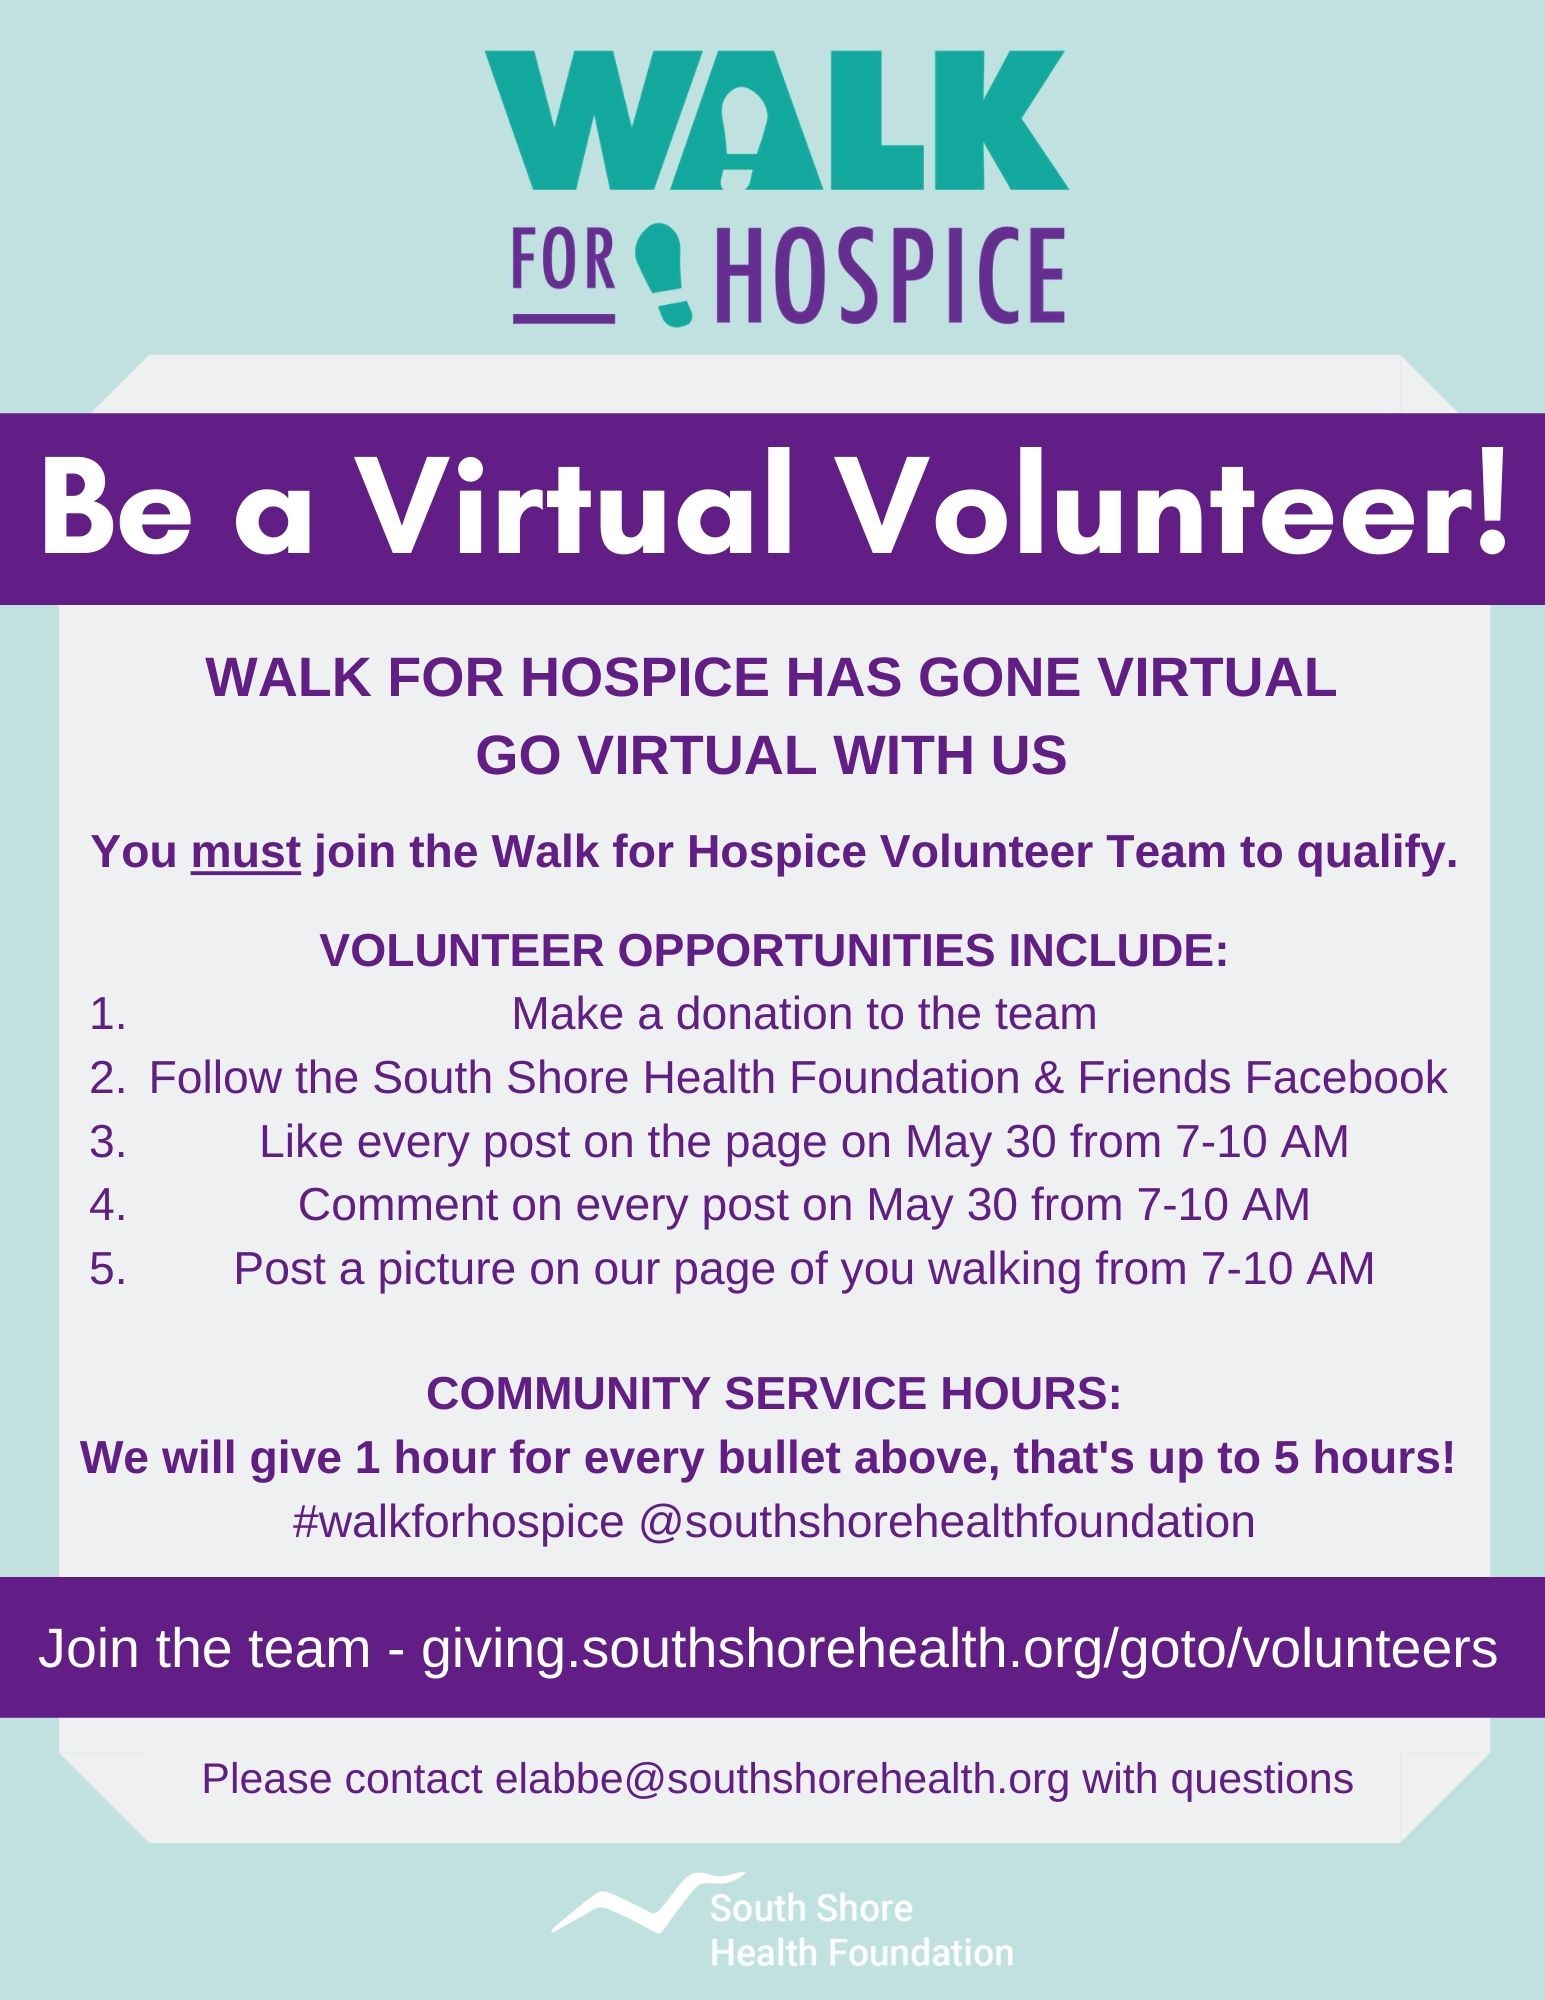 Walk for Hospice Virtual Walk Volunteers Walk for Hospice